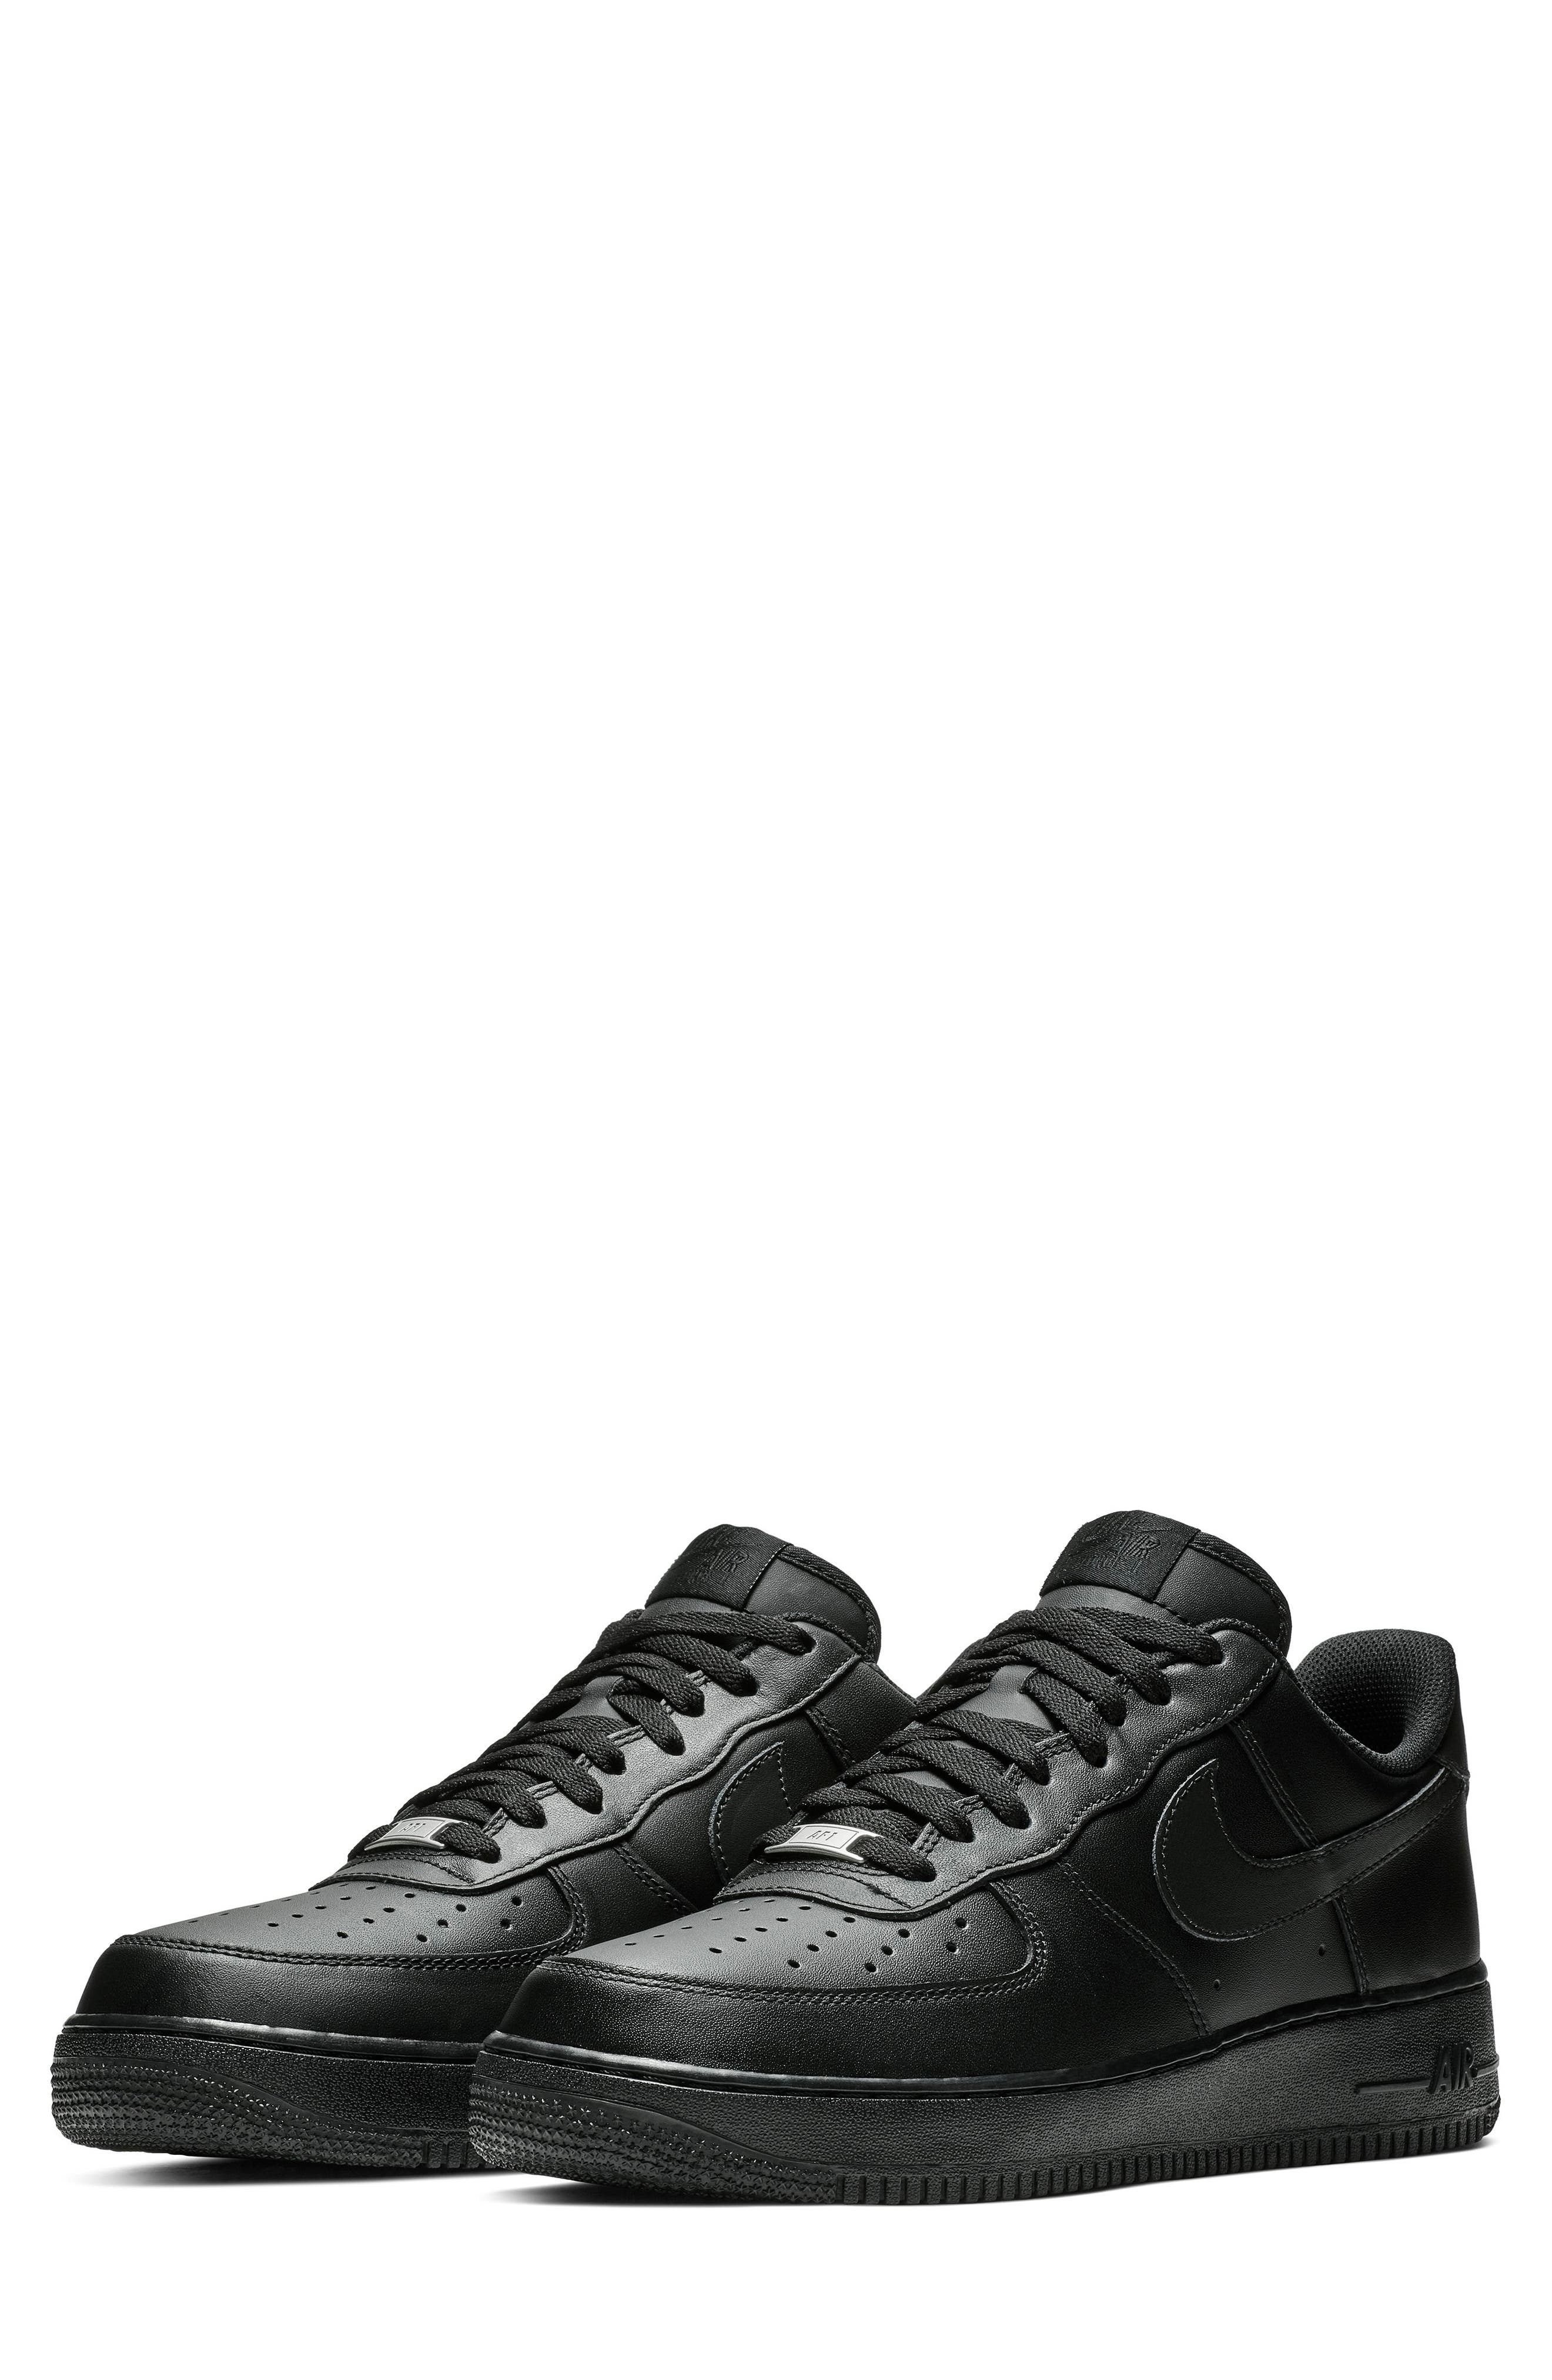 black nike leather sneakers